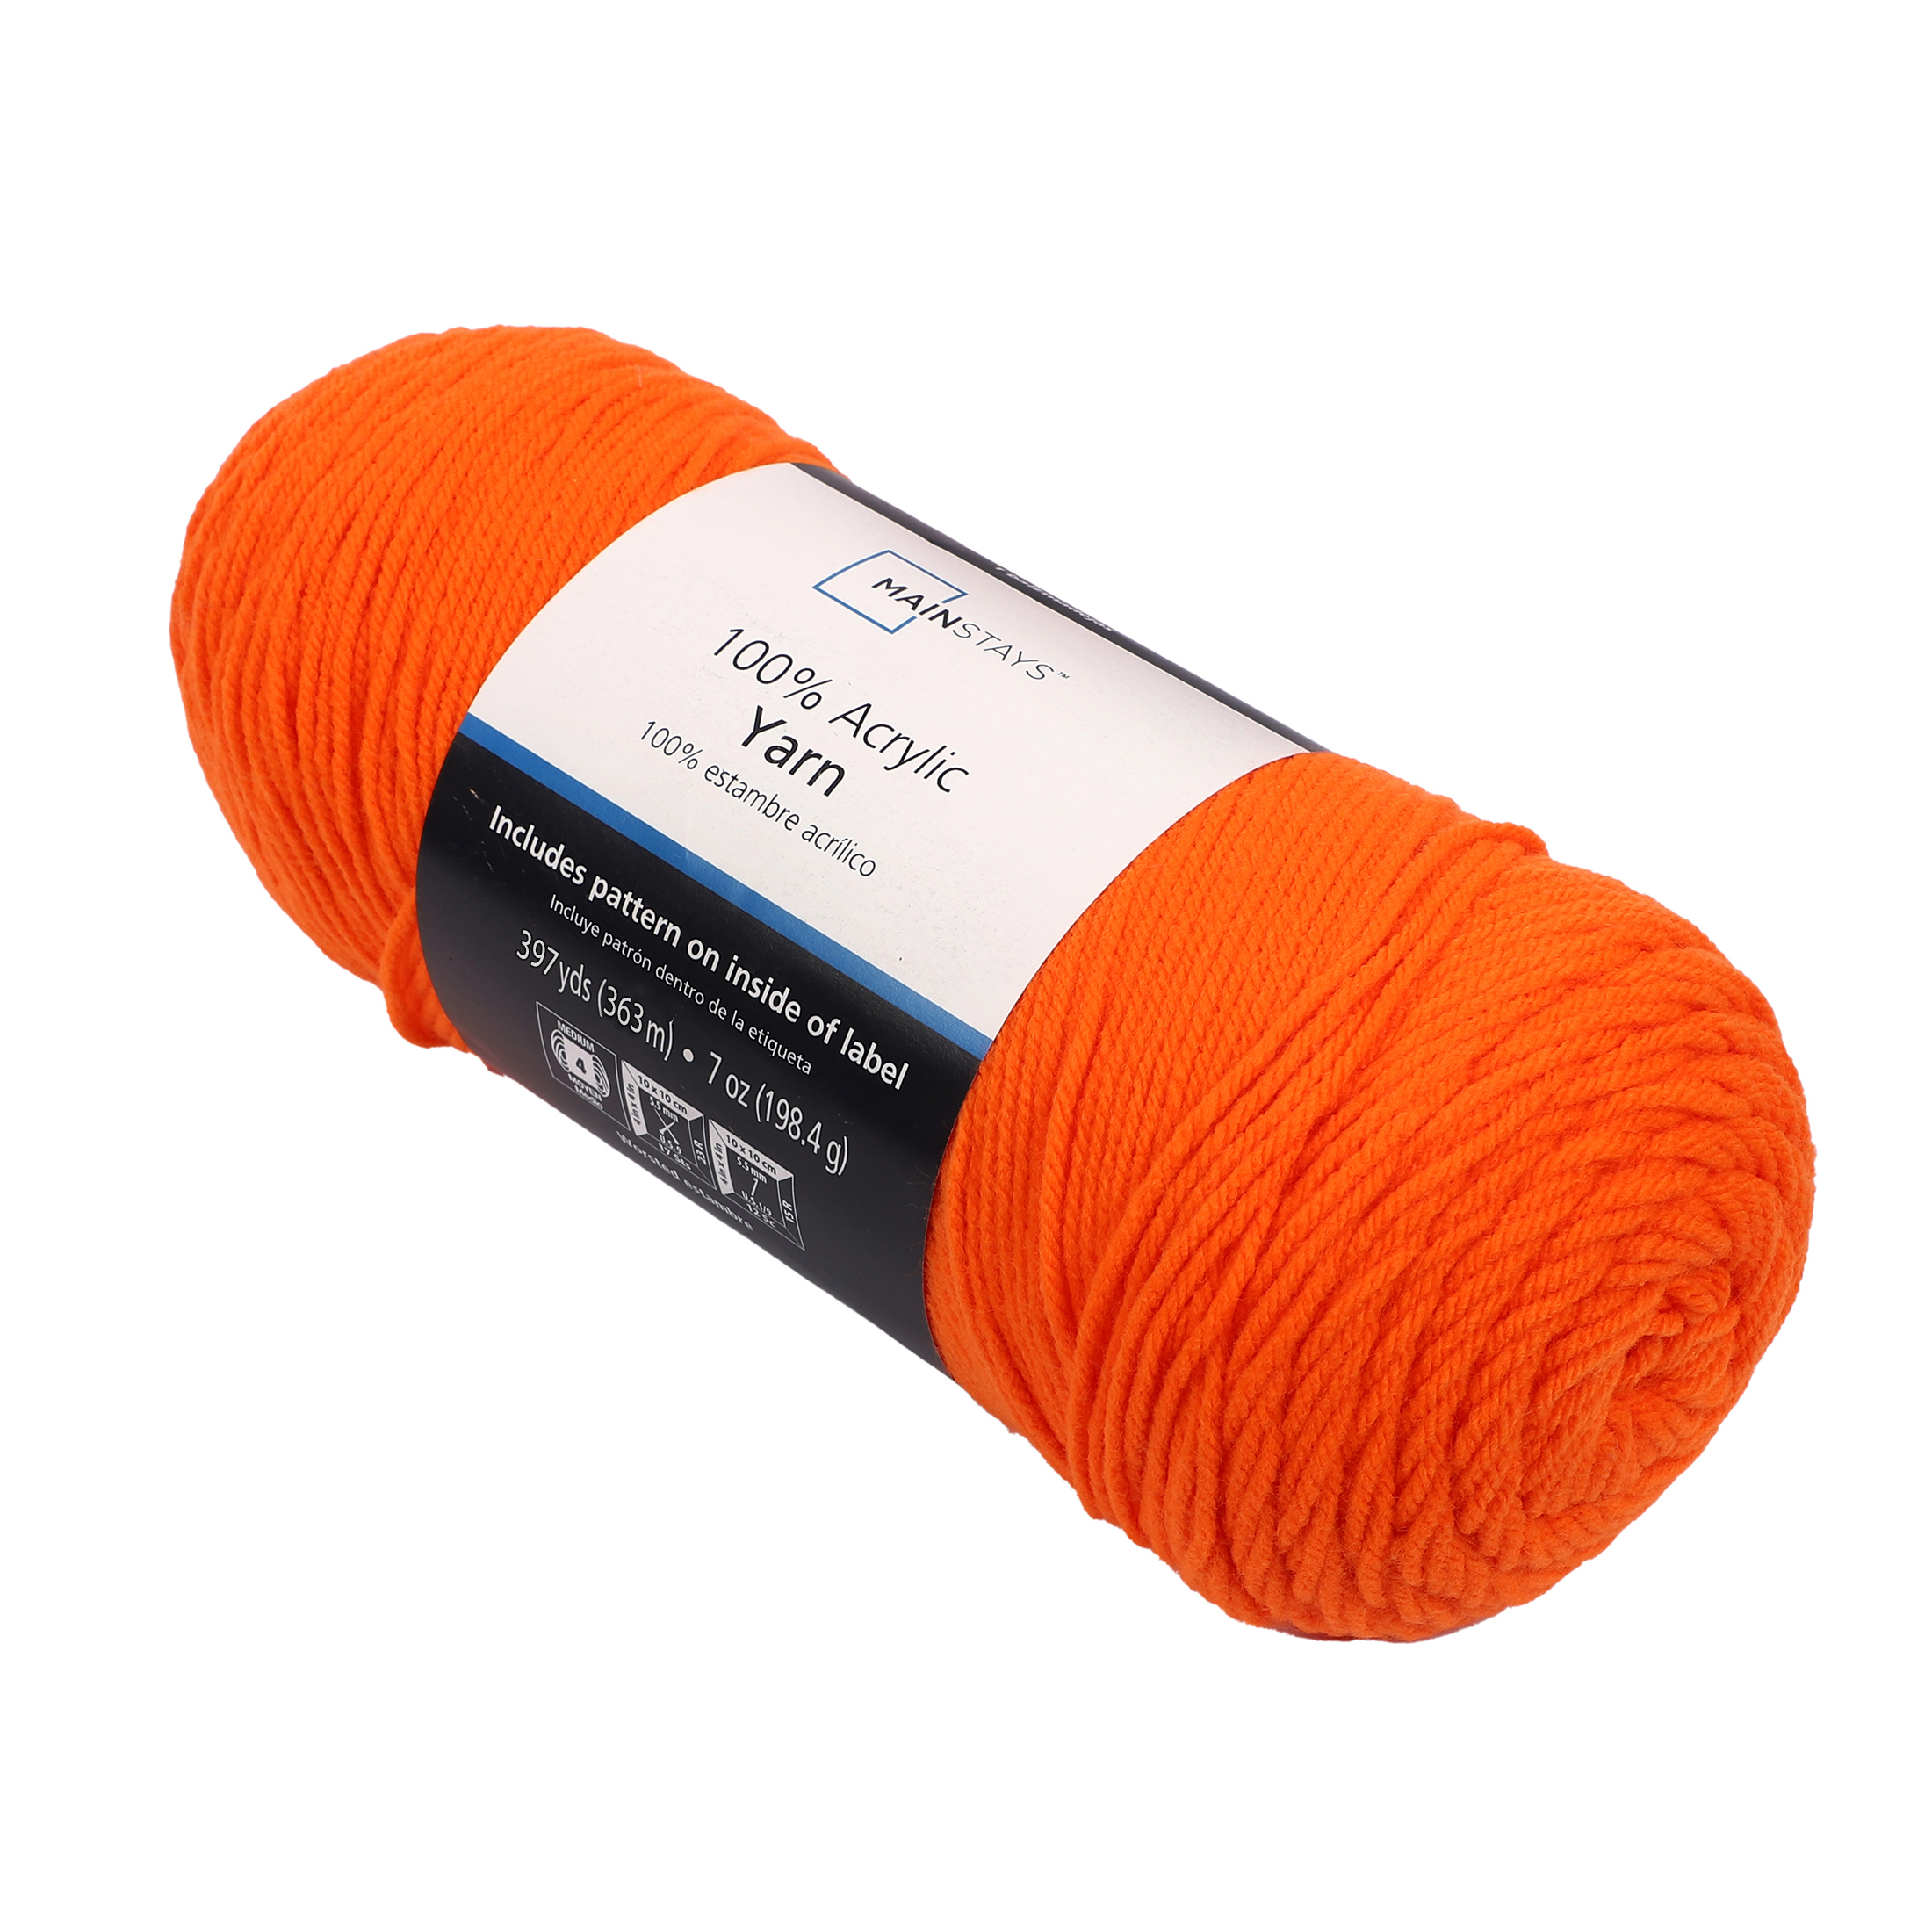 Mainstays Medium Acrylic Orange Yarn, 7 Oz 397 Yards - Walmart.com